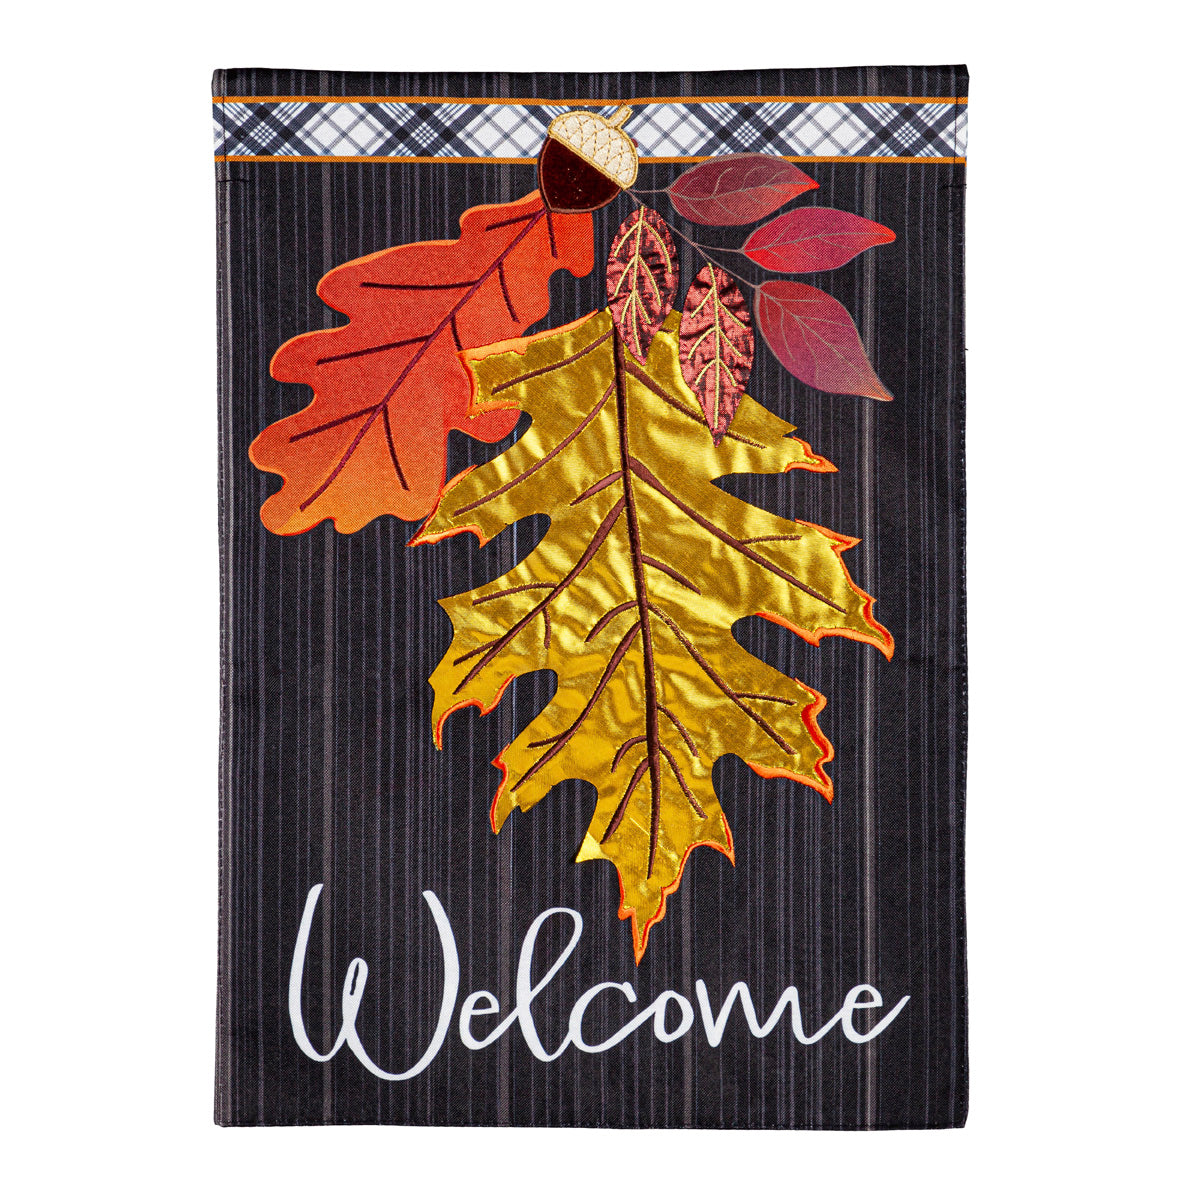 Welcome Autumn Leaves Garden Linen Flag